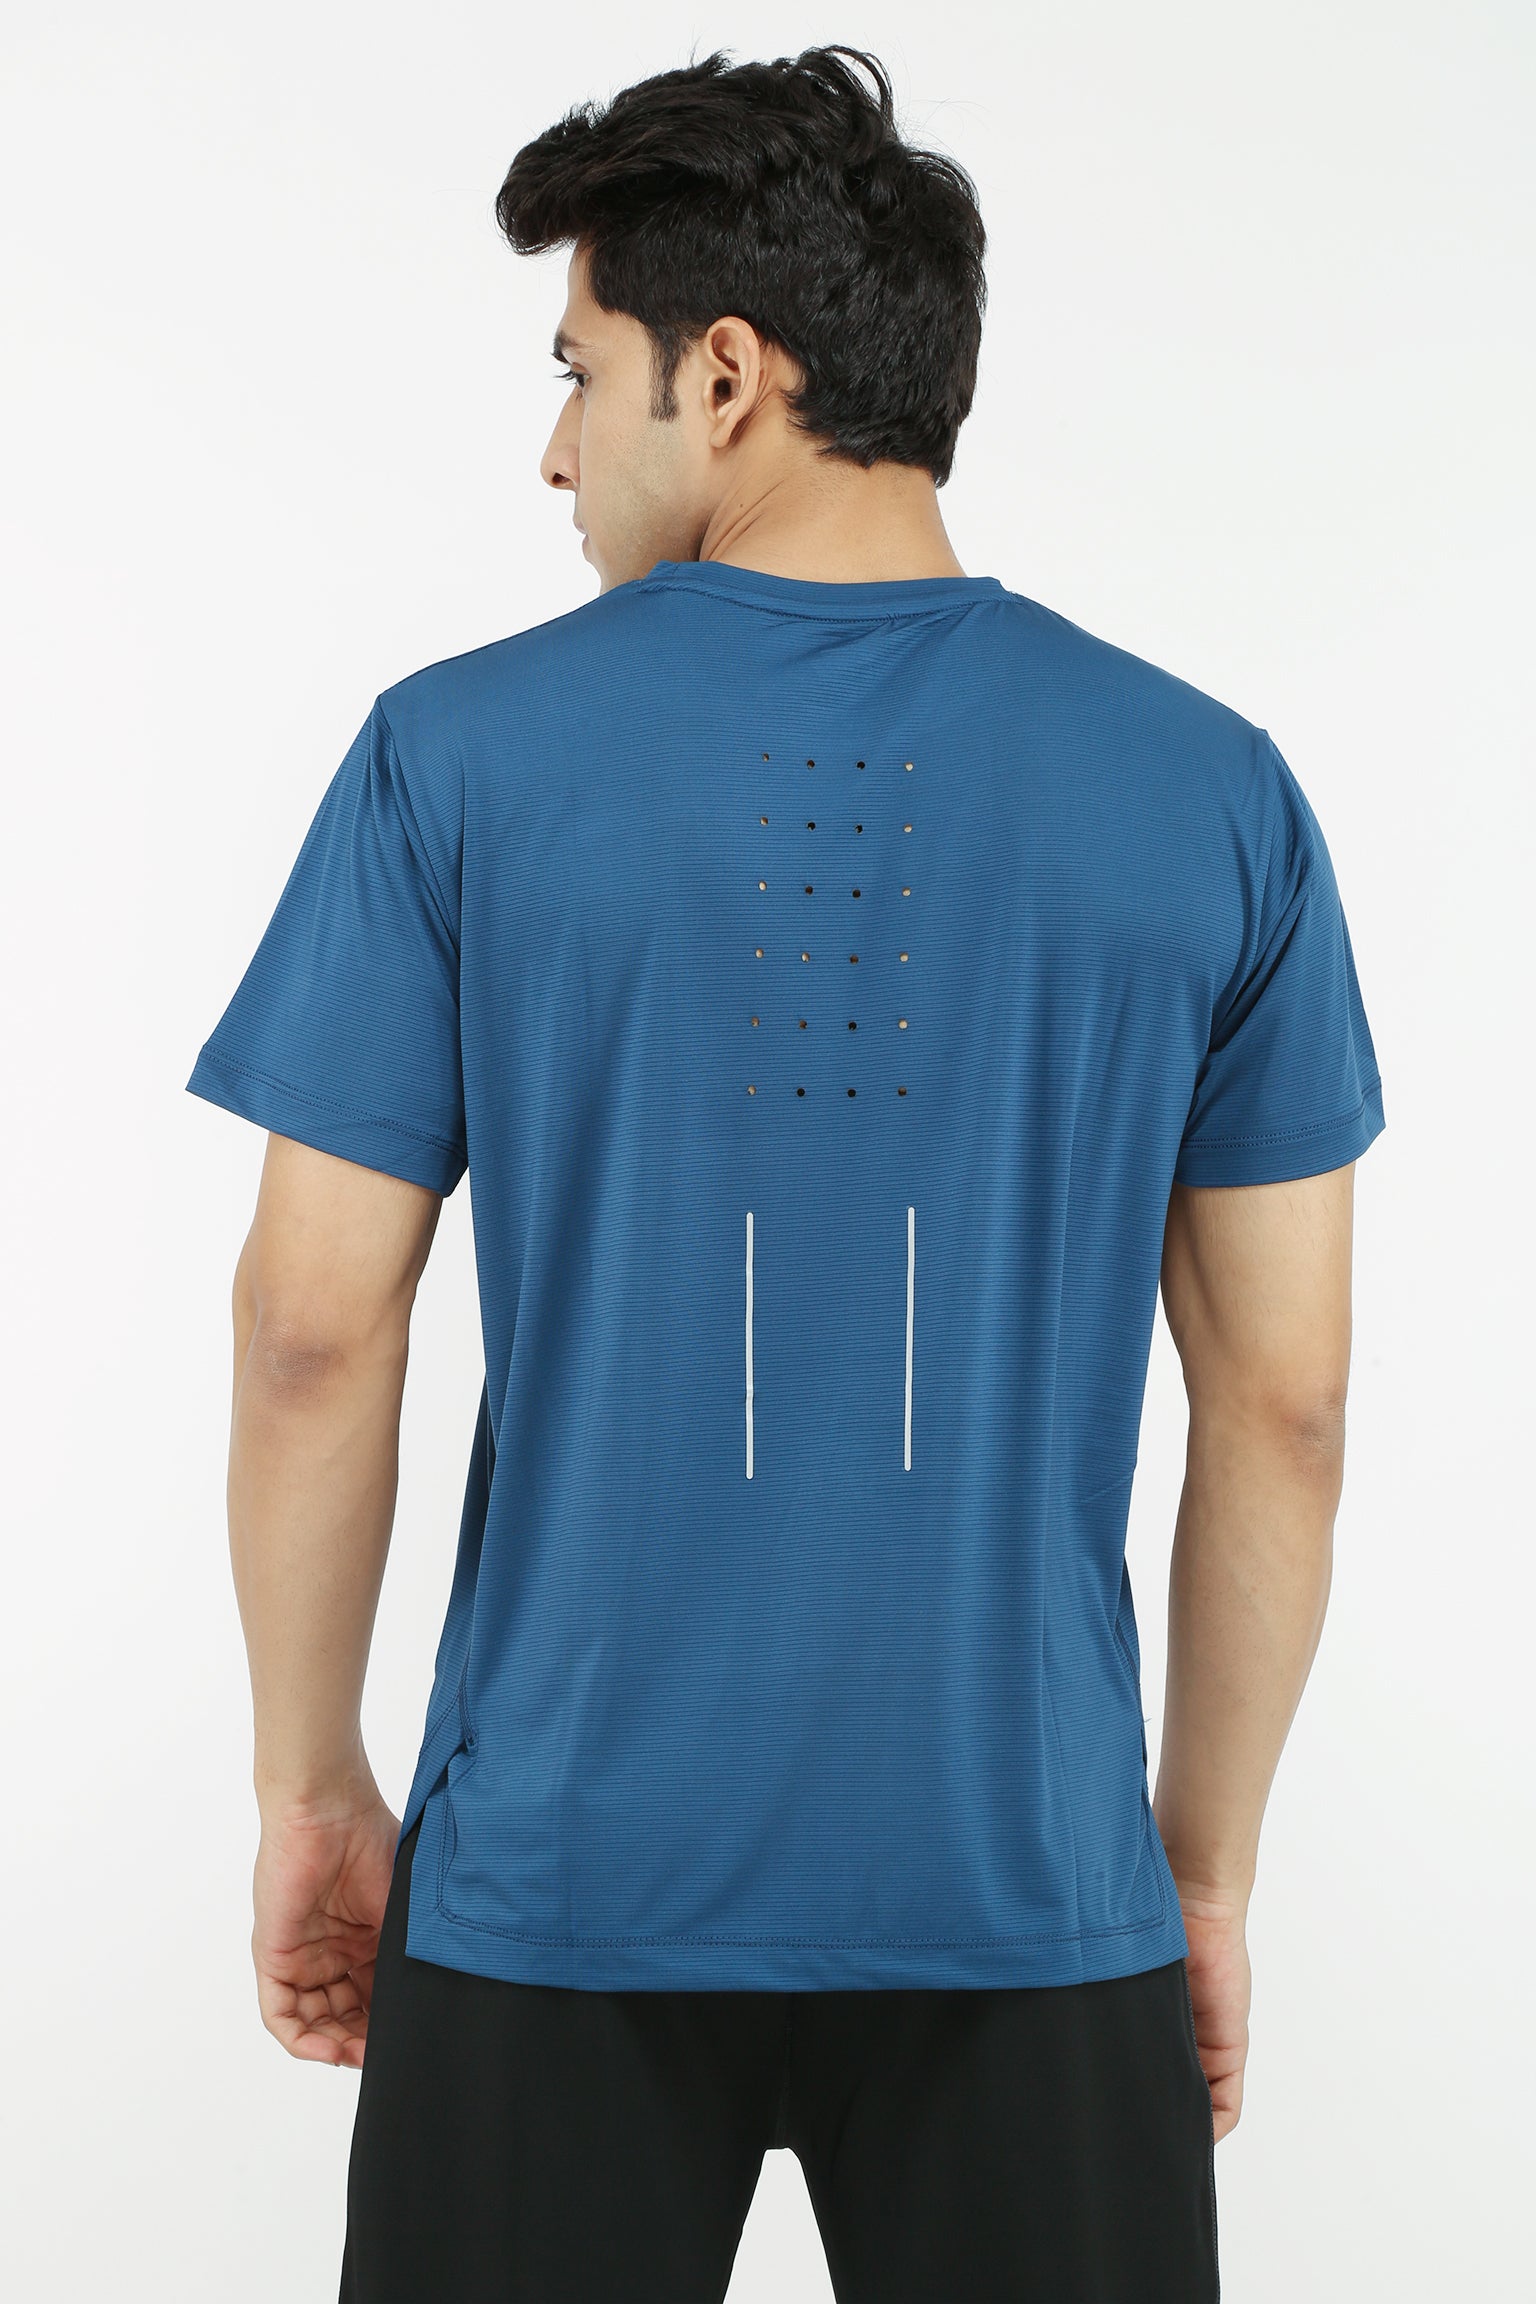 Round Neck T-Shirt with Vent Holes - Men